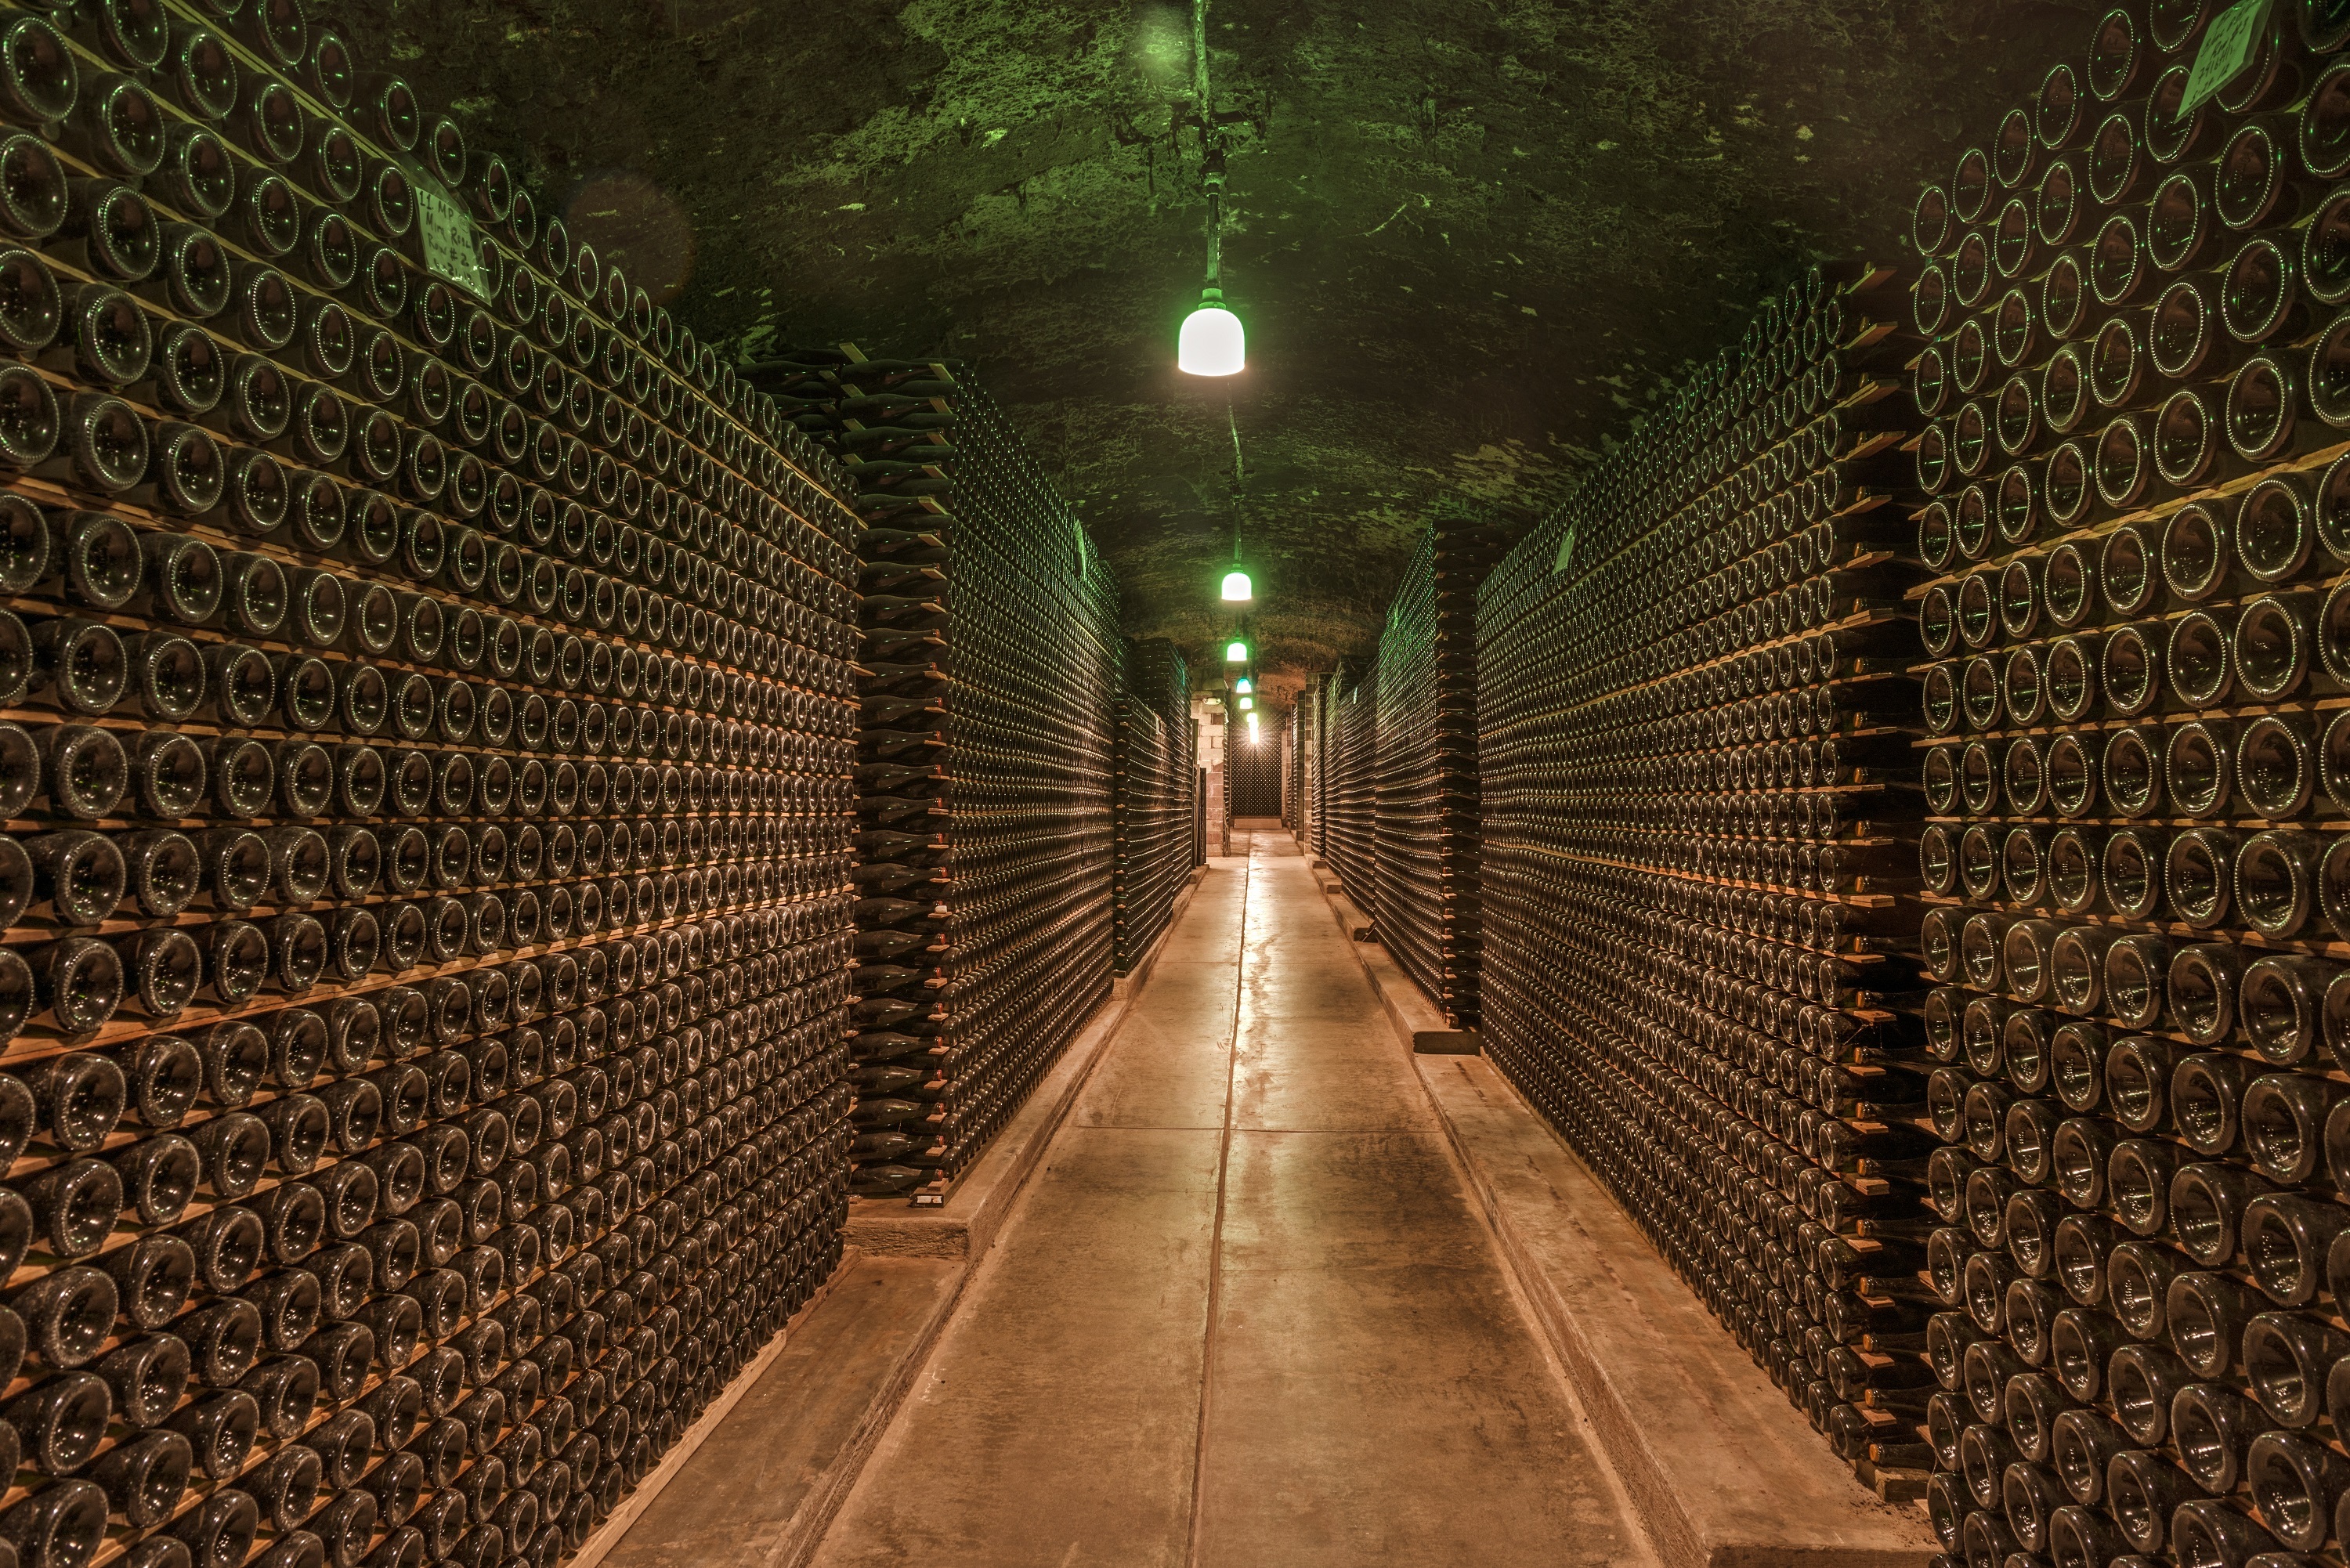 Rows of bottles in an underground wine cellar by skeeze